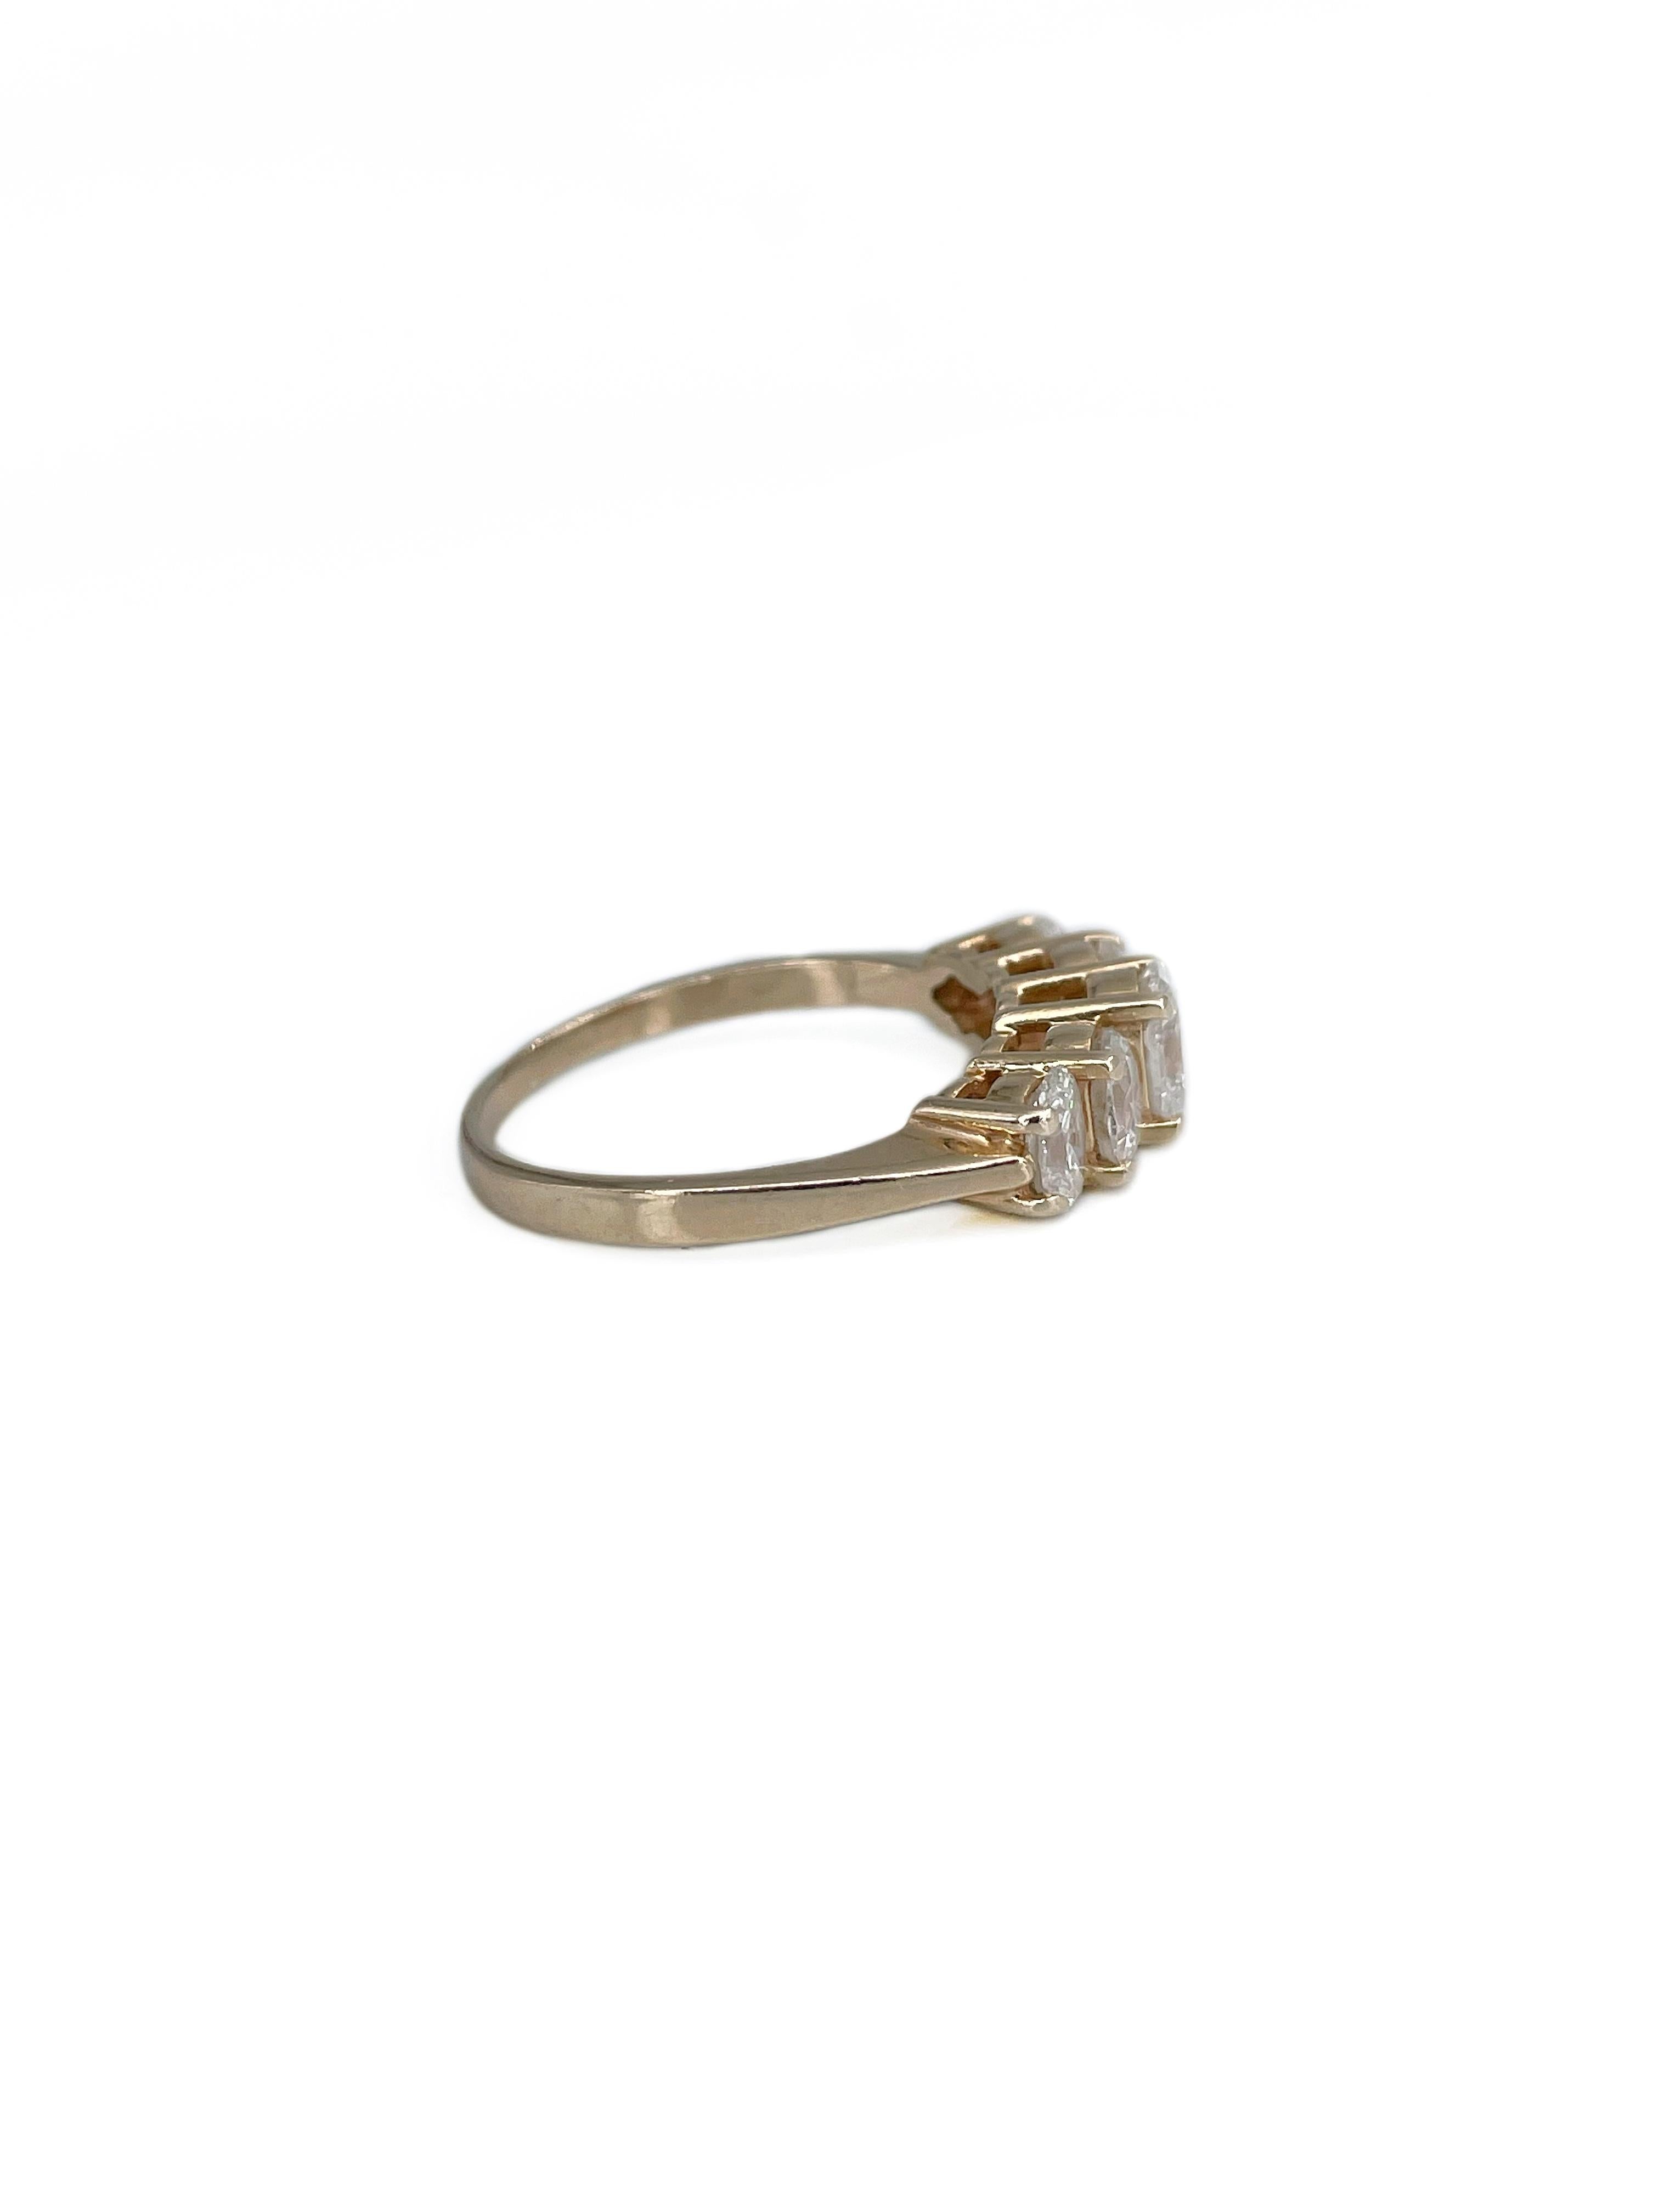 Mixed Cut Mid Century 14 Karat Gold TW 1.25 Carat Diamond Five-Stone Ring For Sale